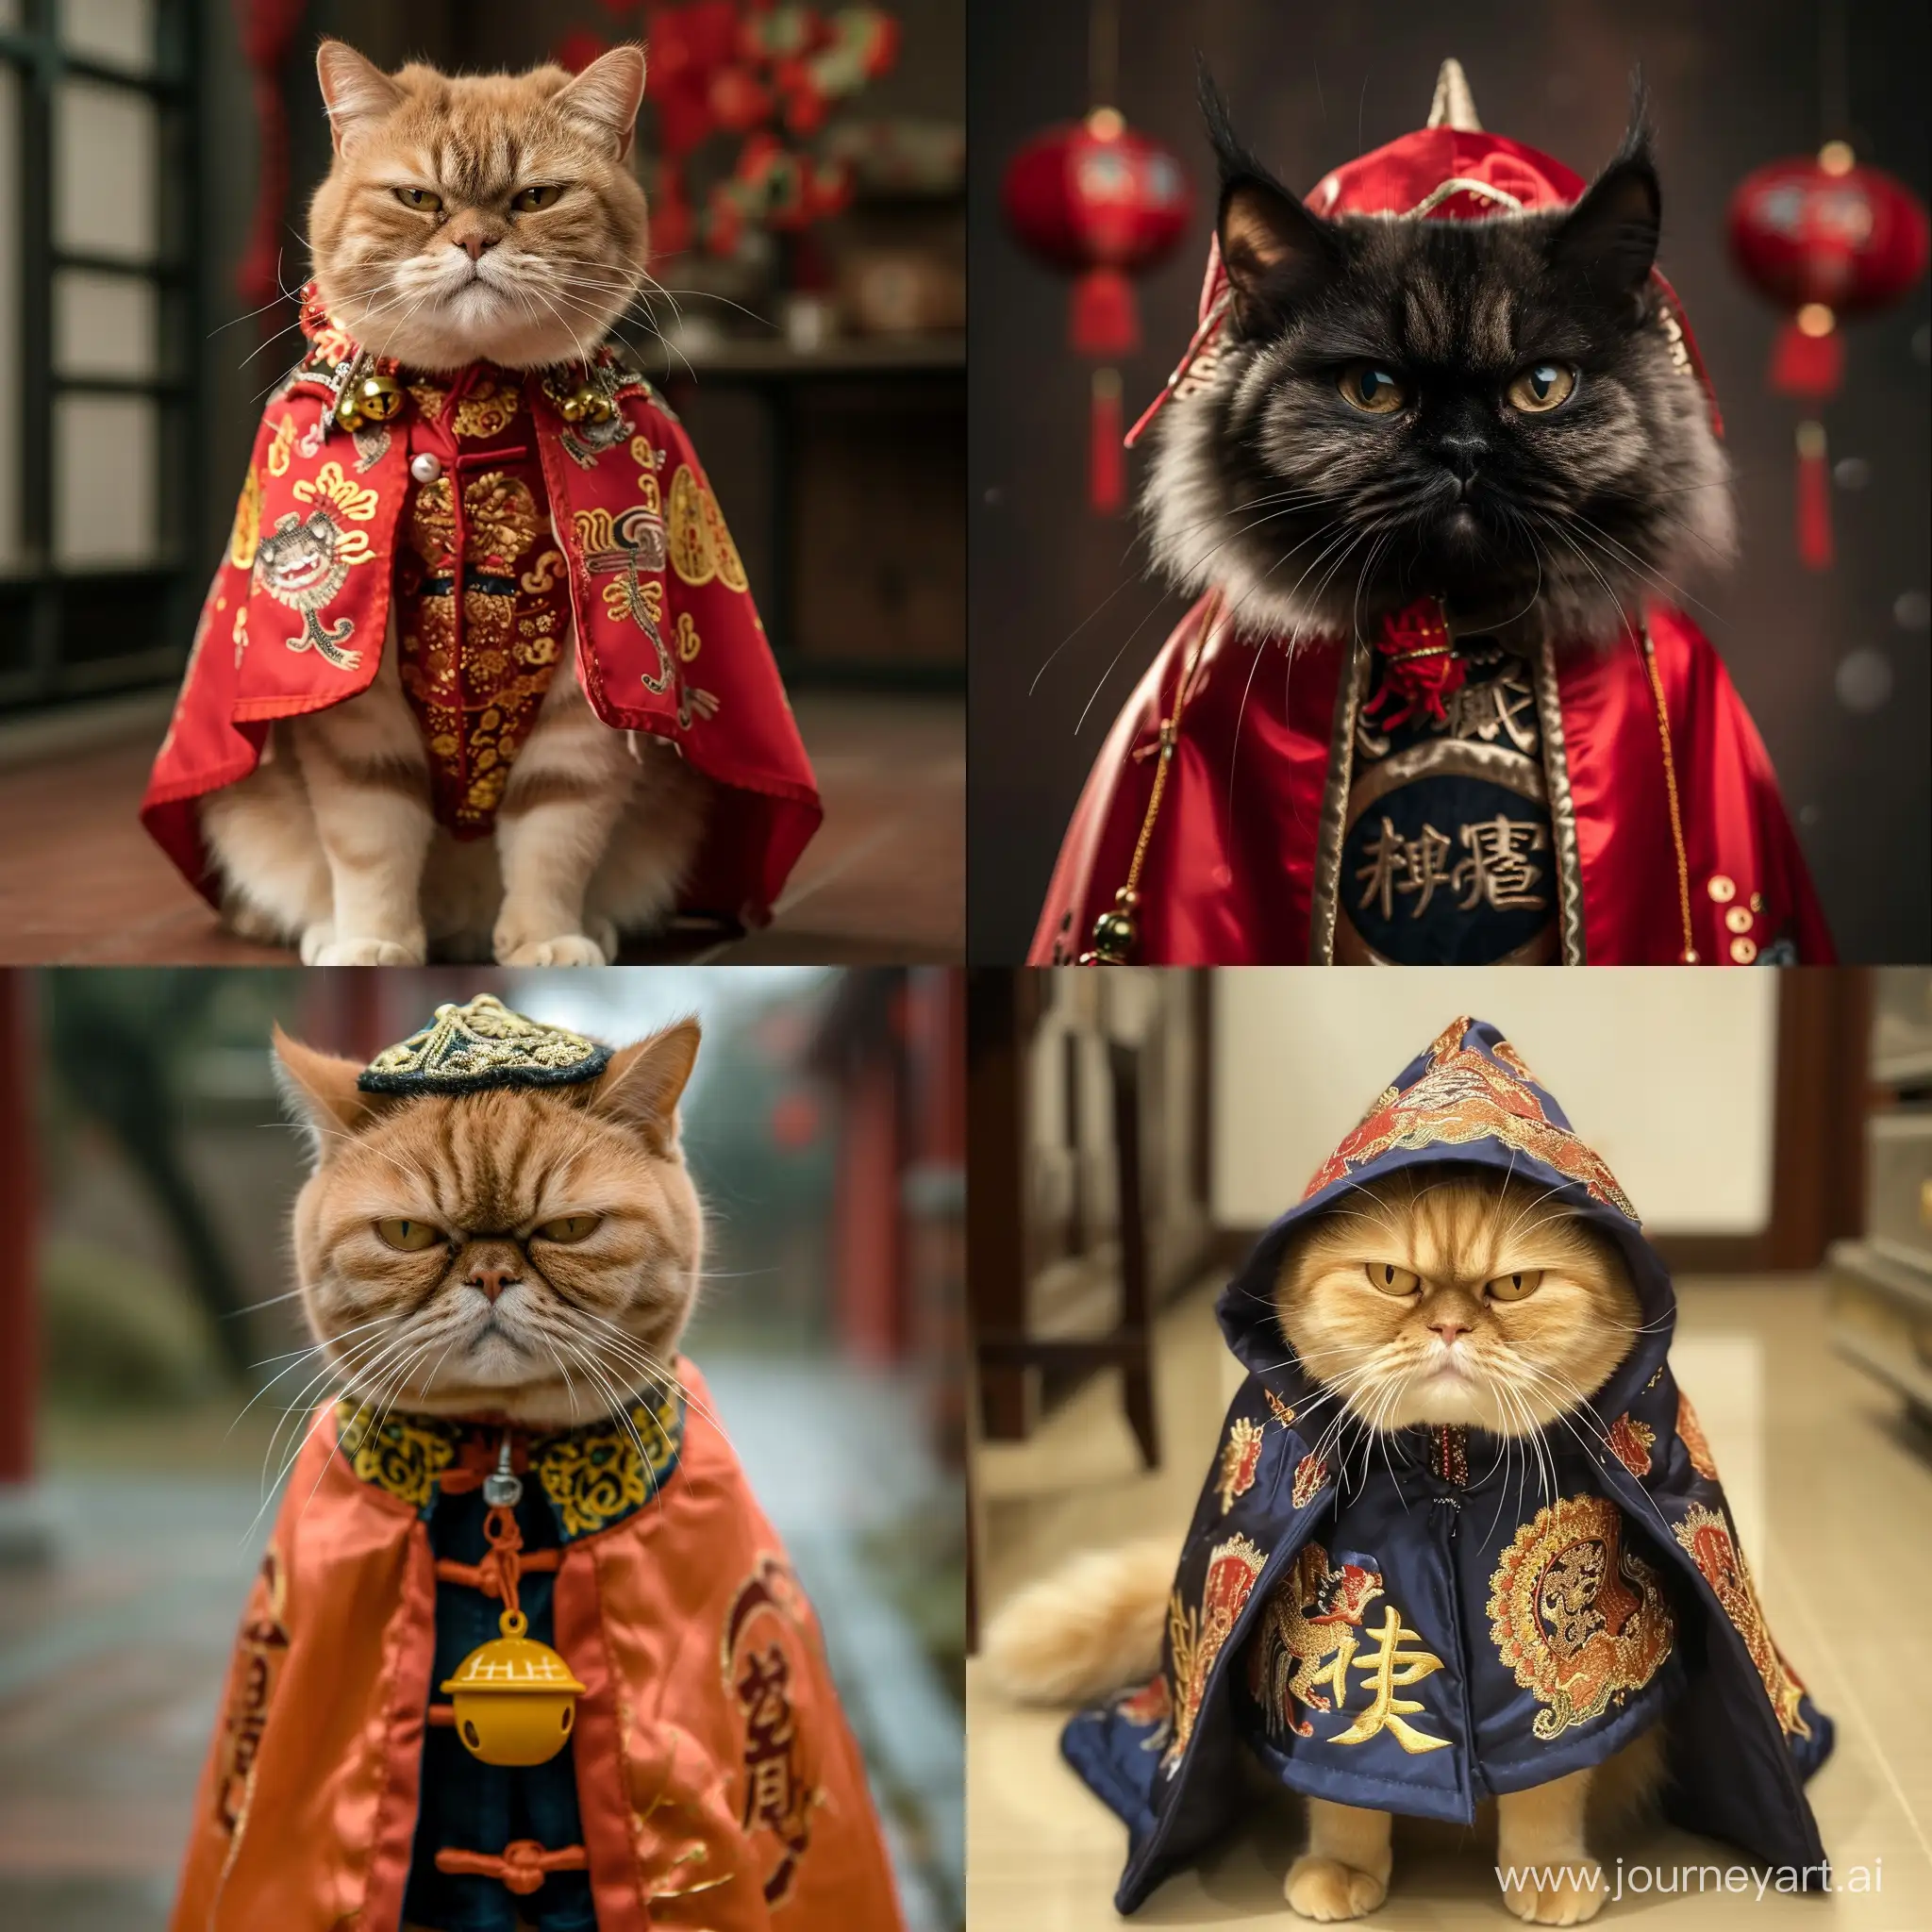 Festive-Angry-China-Cat-Wearing-New-Years-Cloak